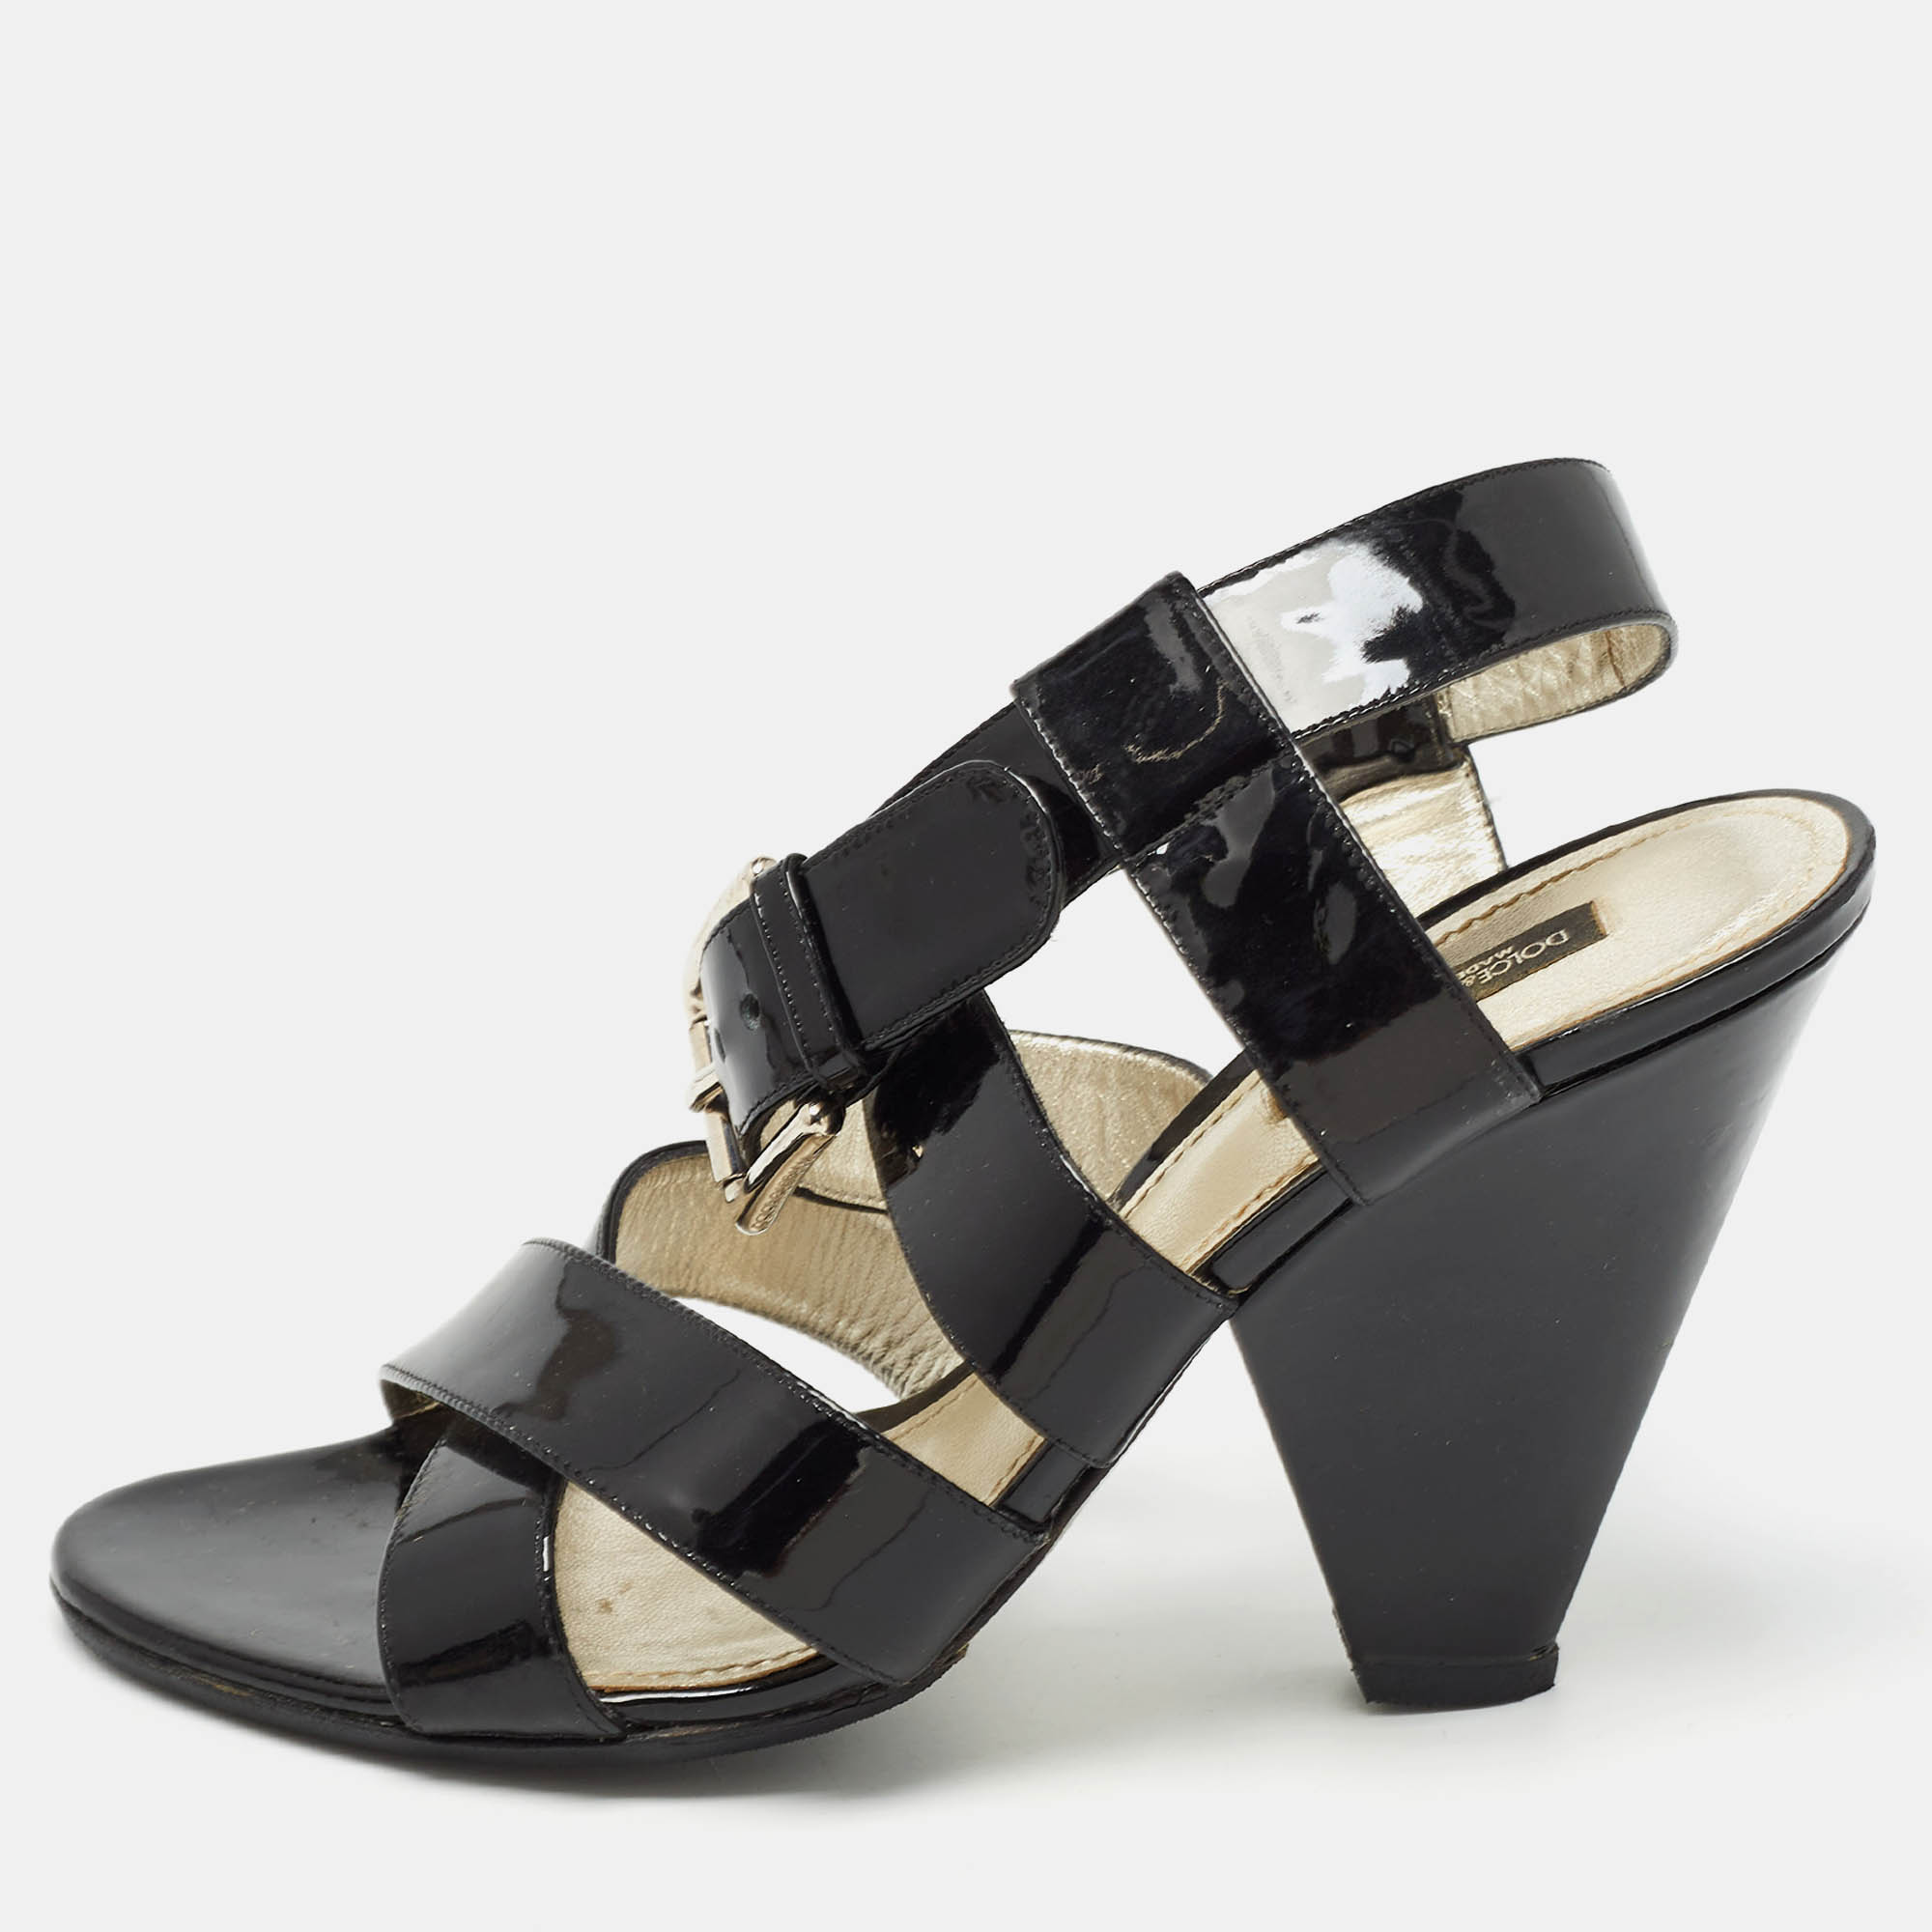 Dolce & gabbana black patent leather ankle strap sandals size 38.5